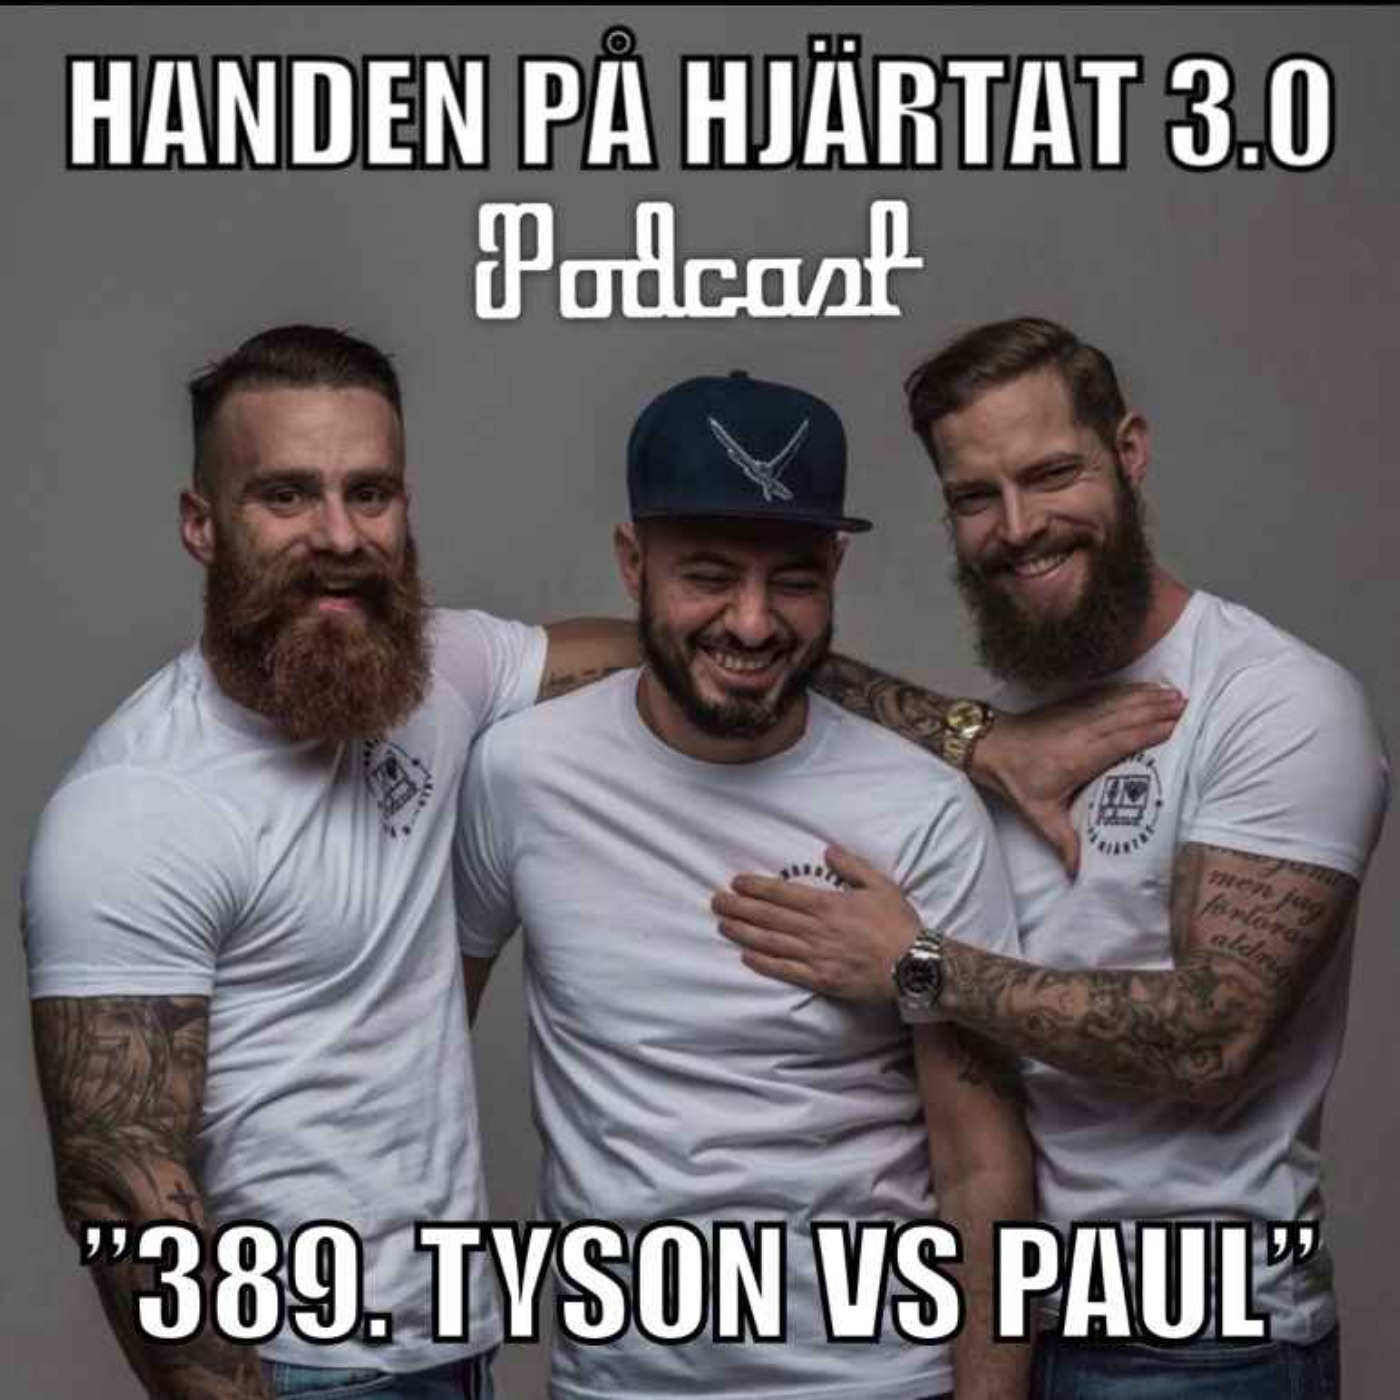 ”389. TYSON VS PAUL”